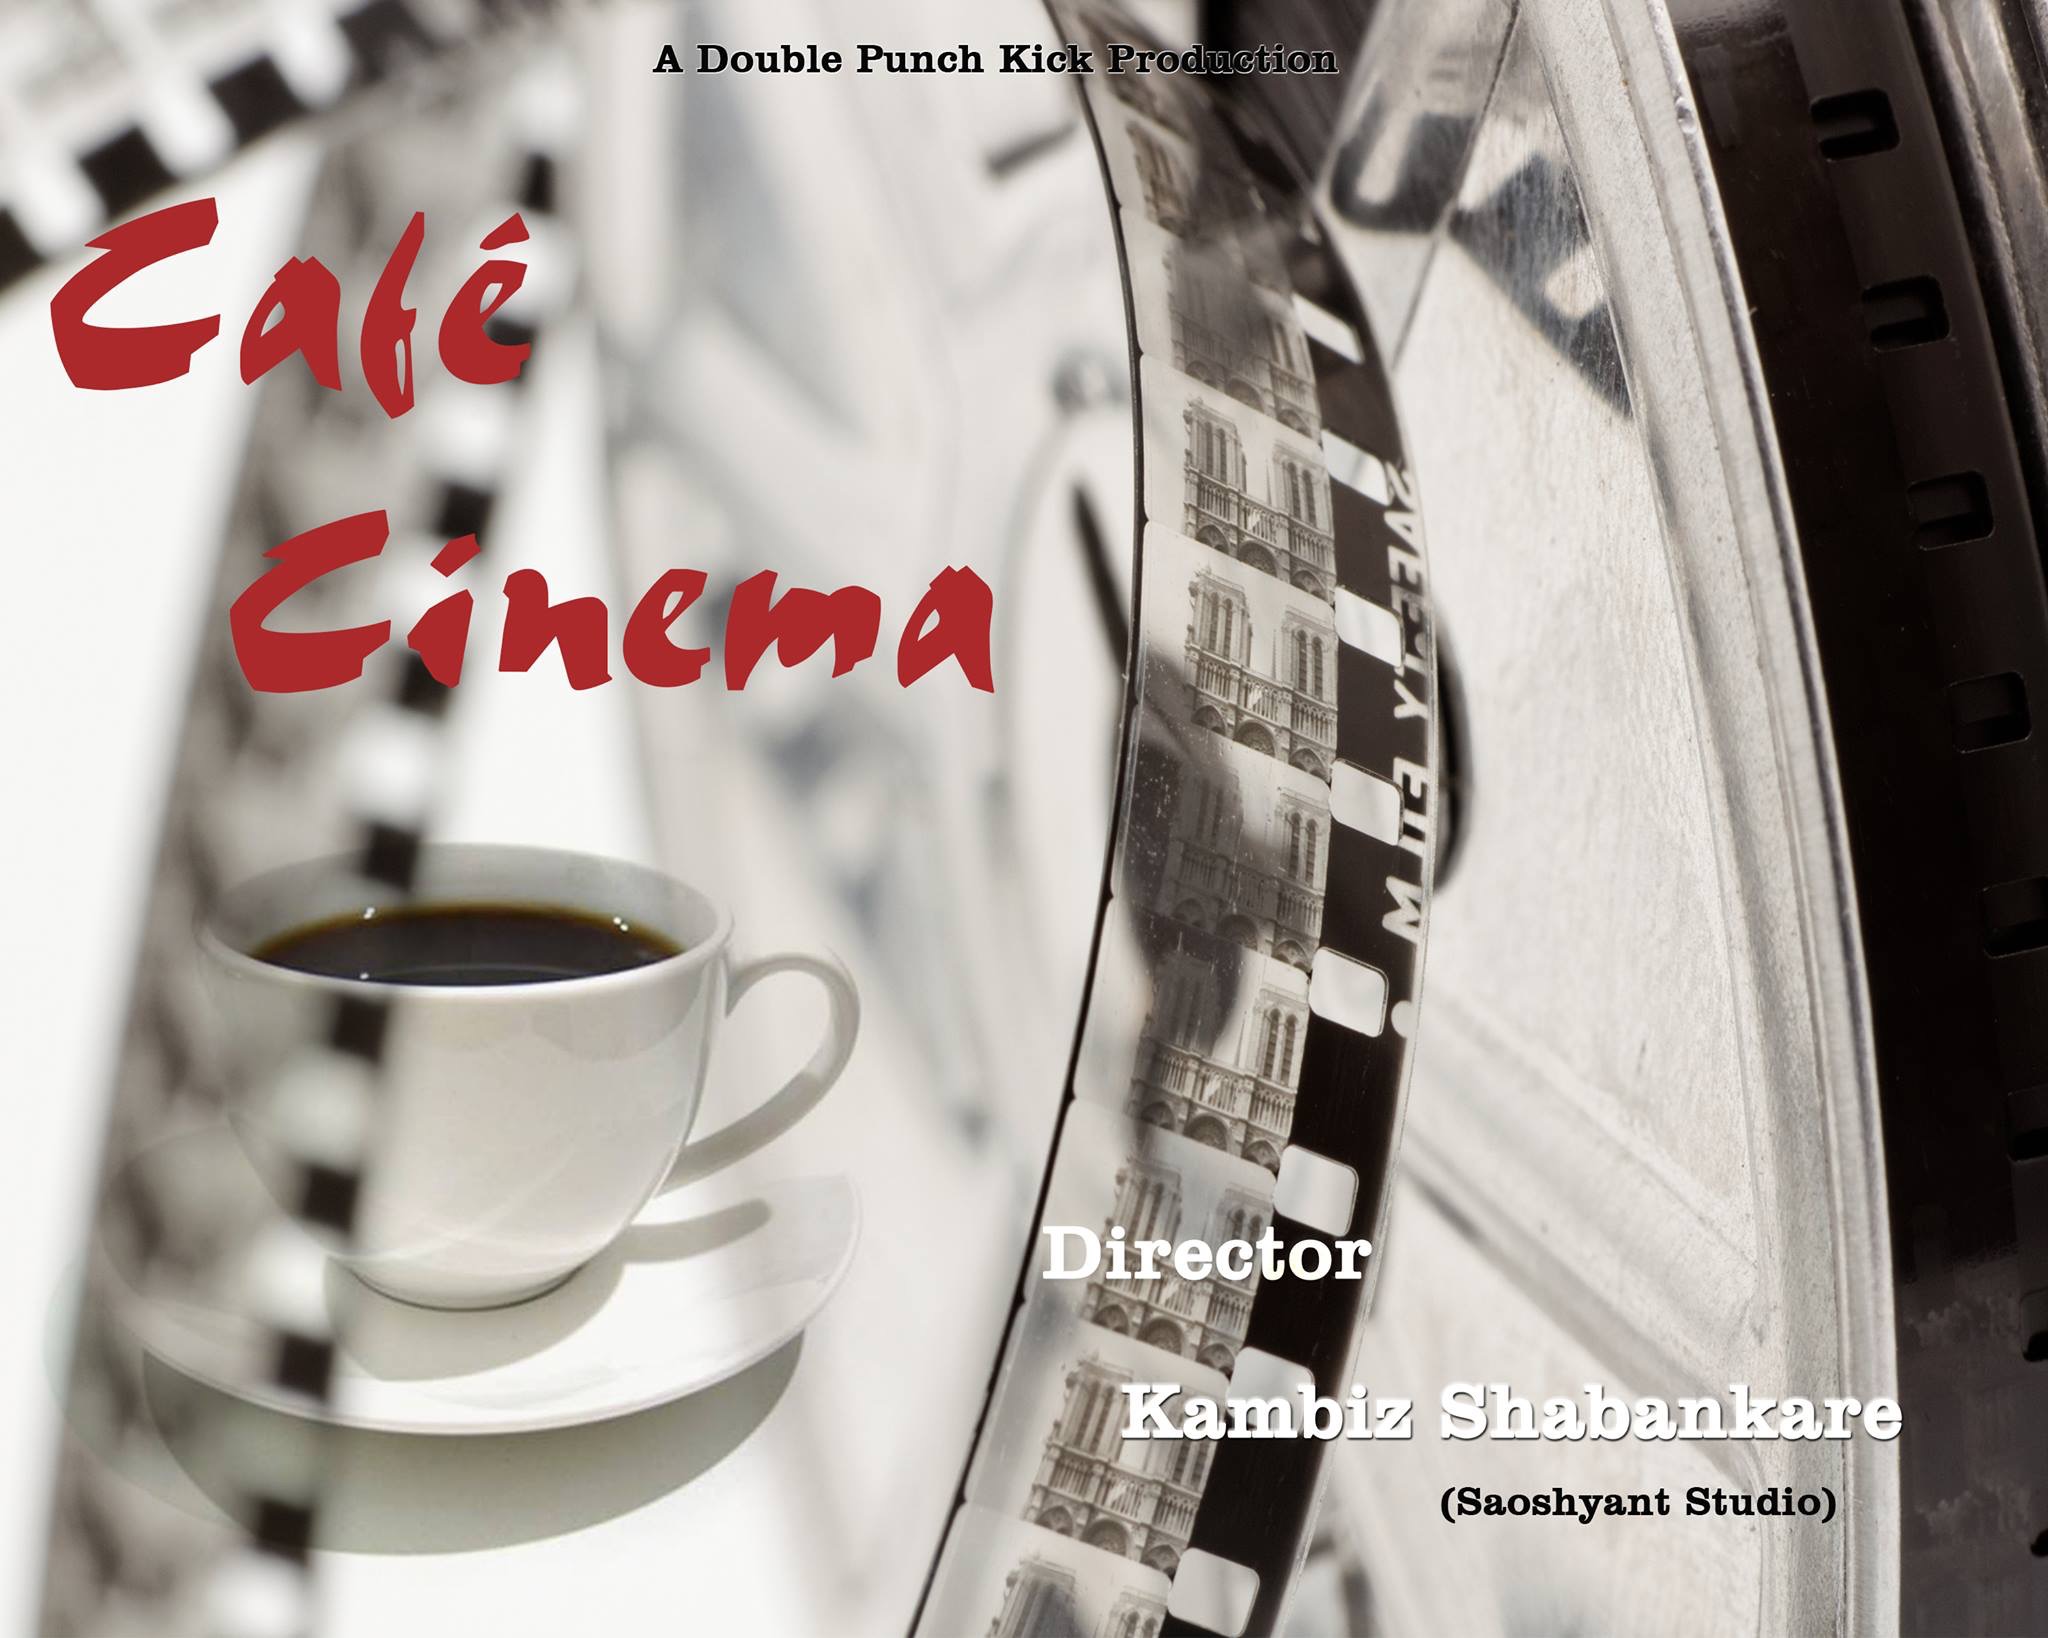 Café Cinema